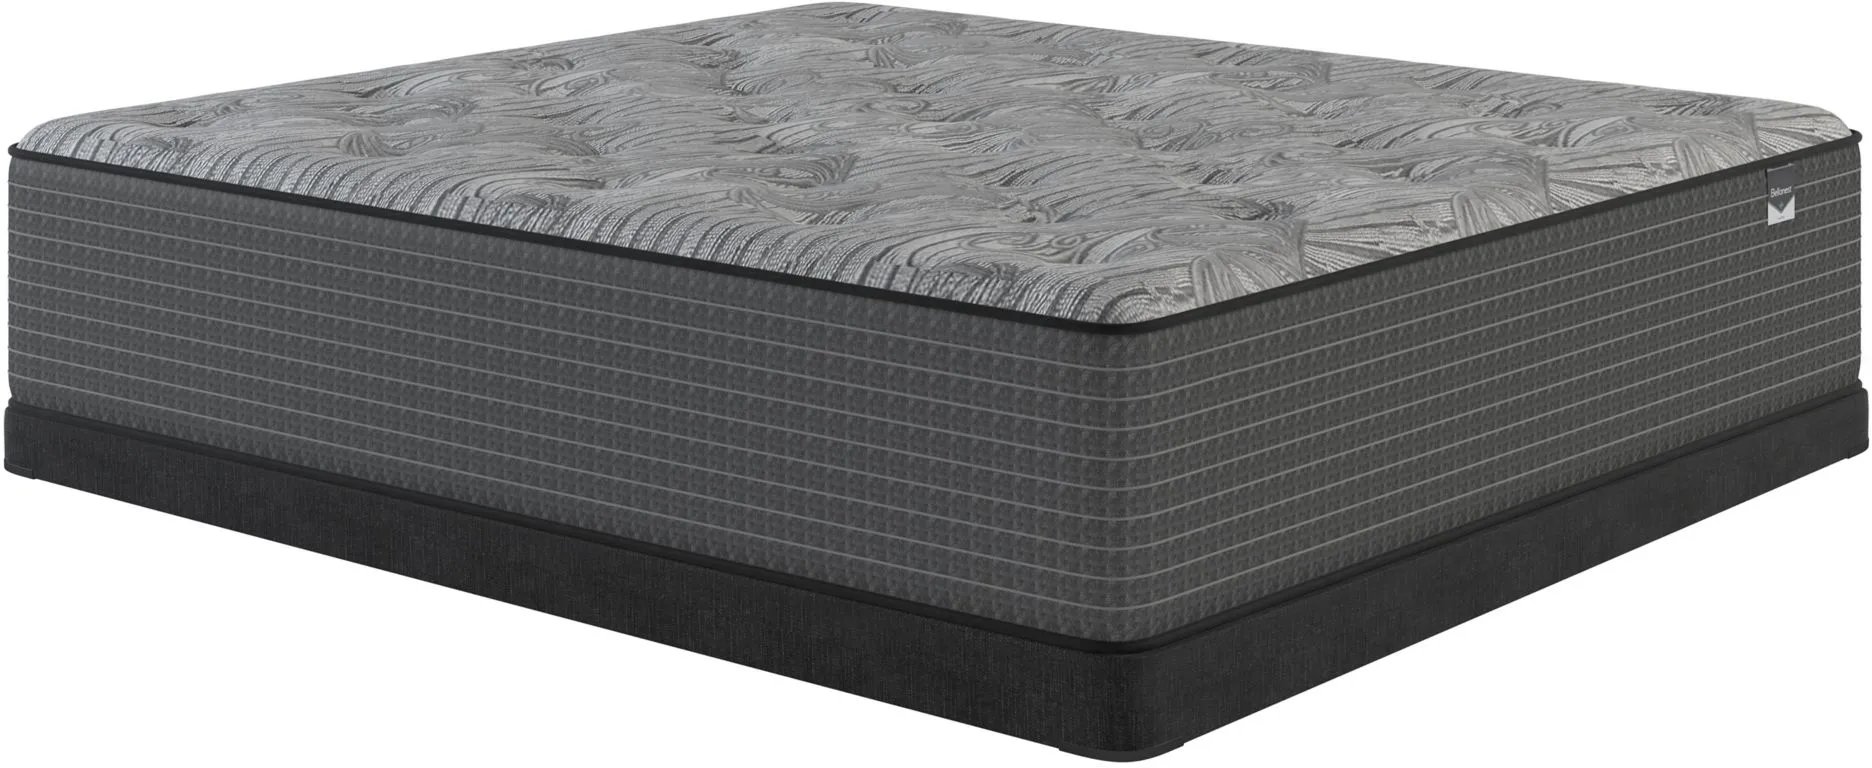 bellanest dahlia plush euro-top mattress